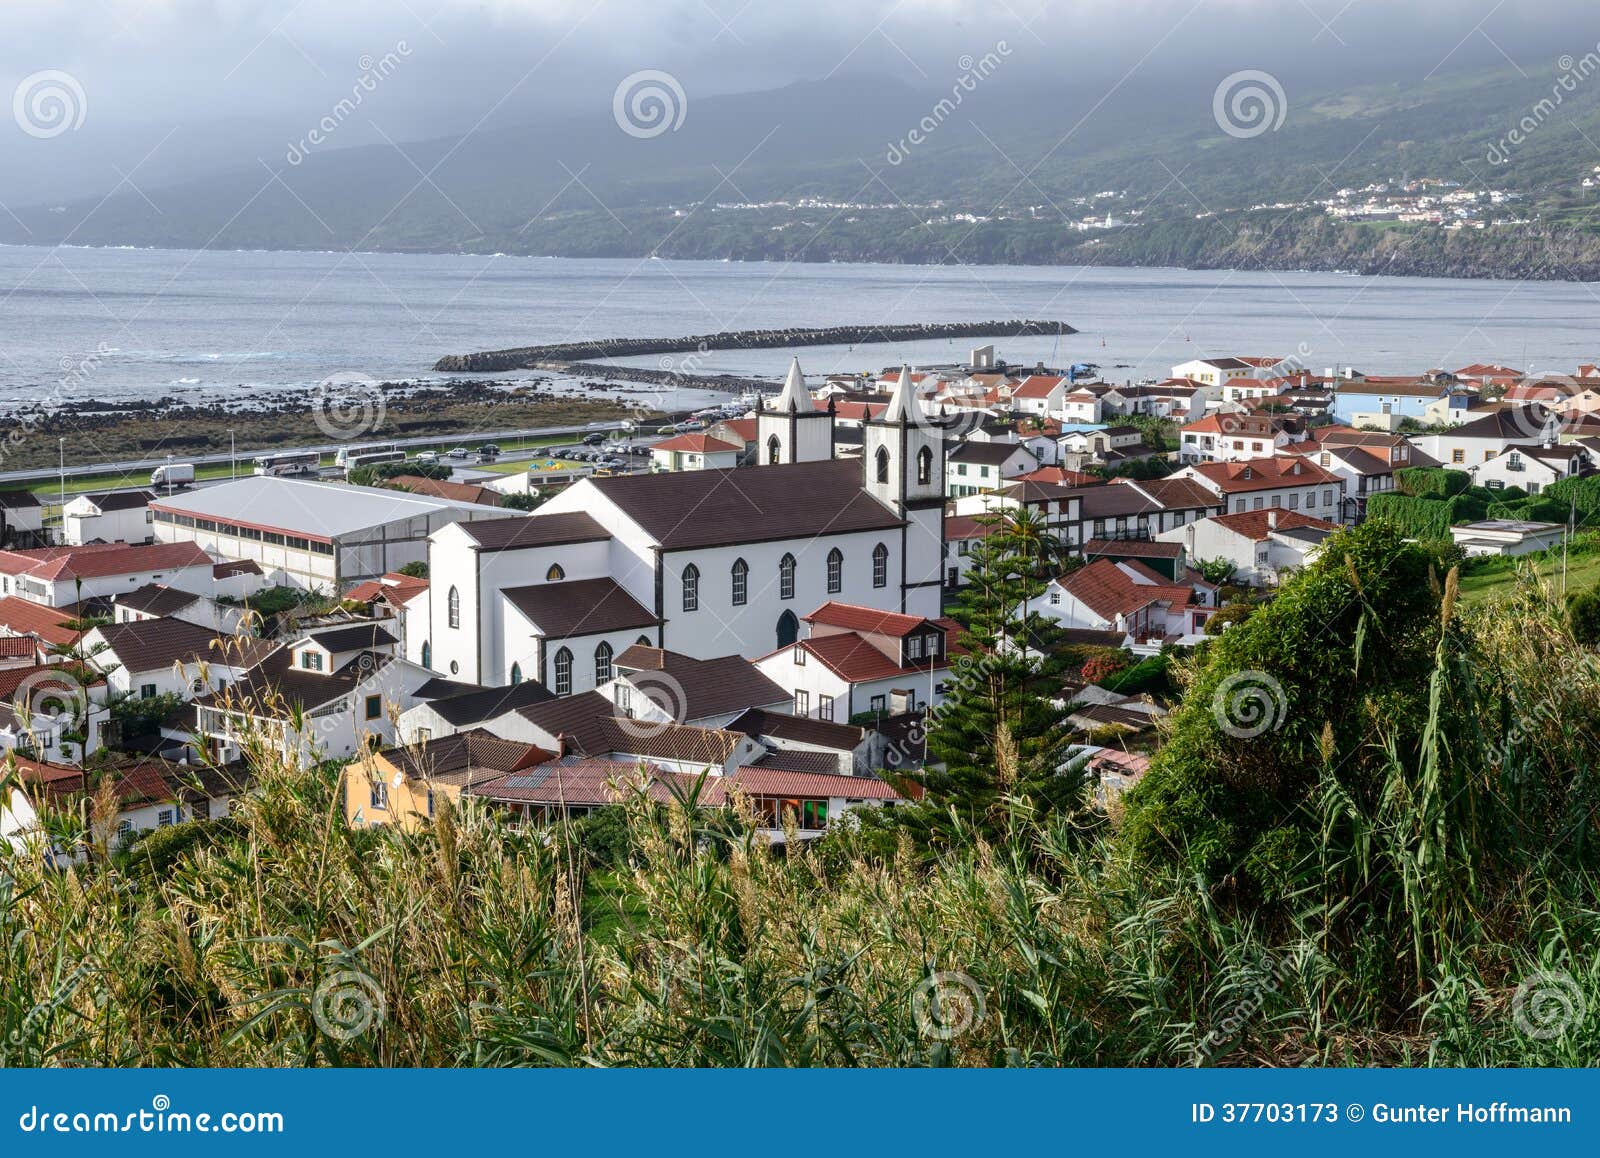 lajes, pico island, azores archipelago (portugal)